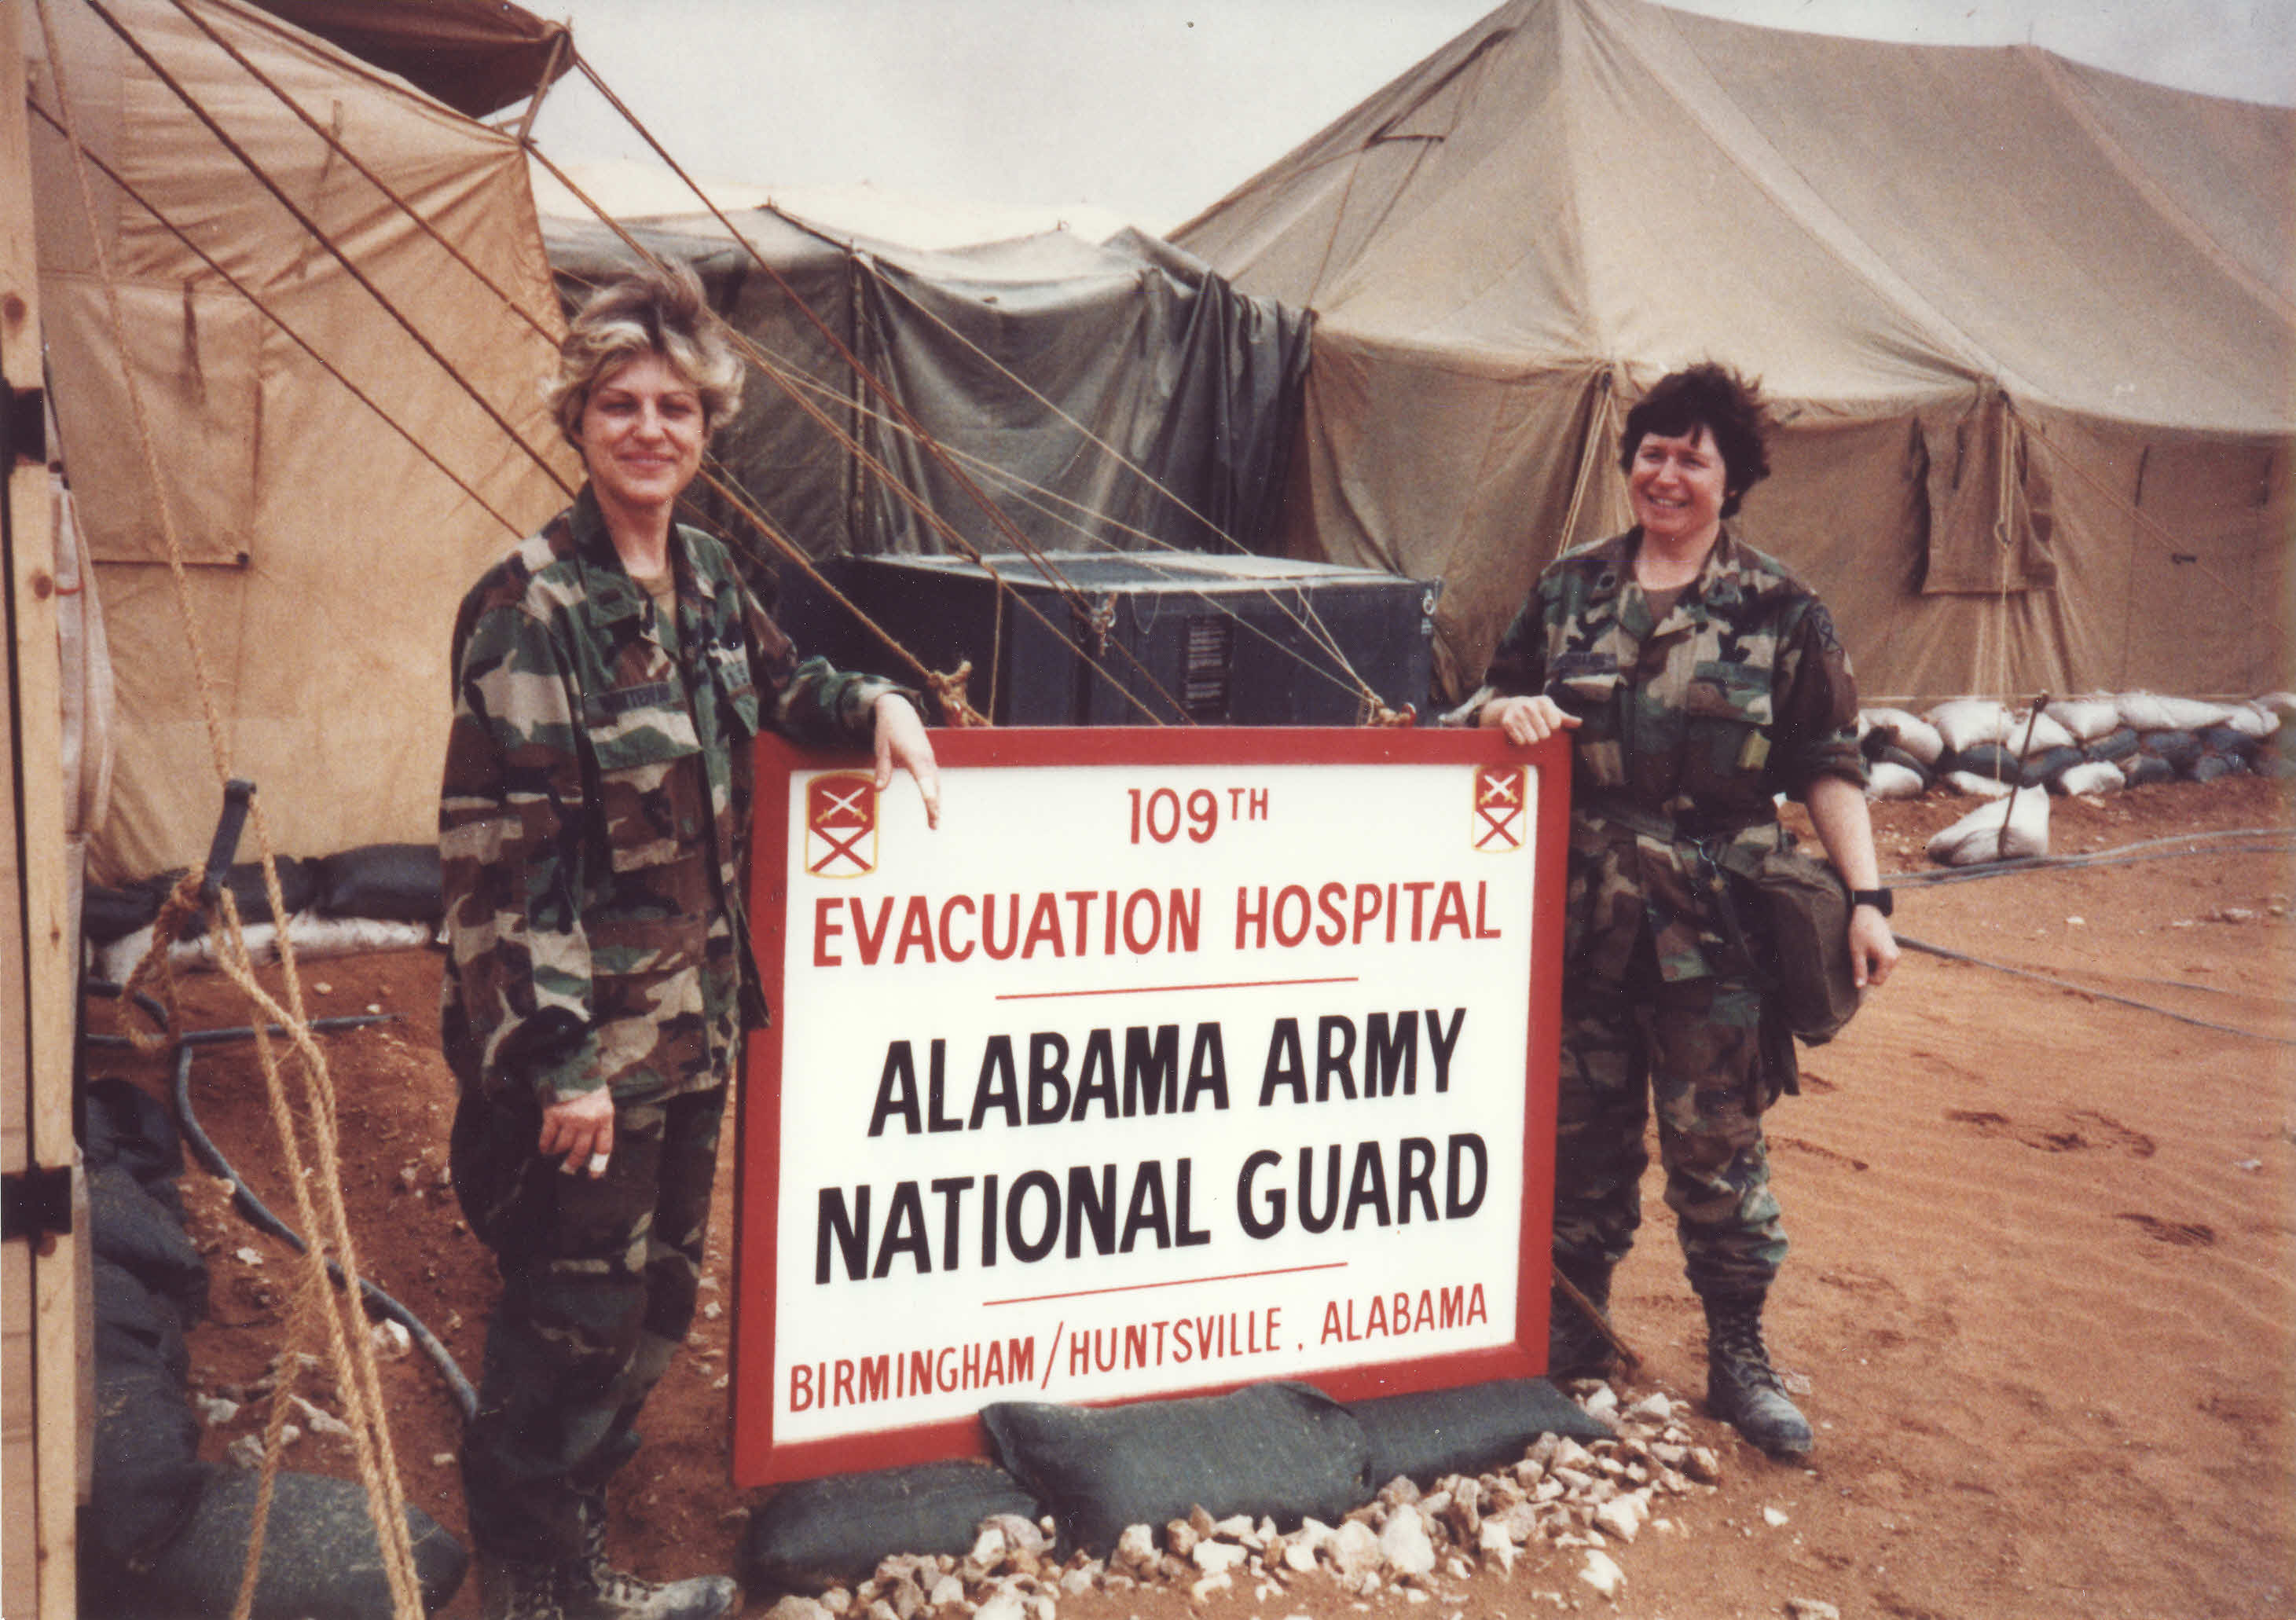 Army National Guard's 109th Evacuation Hospital